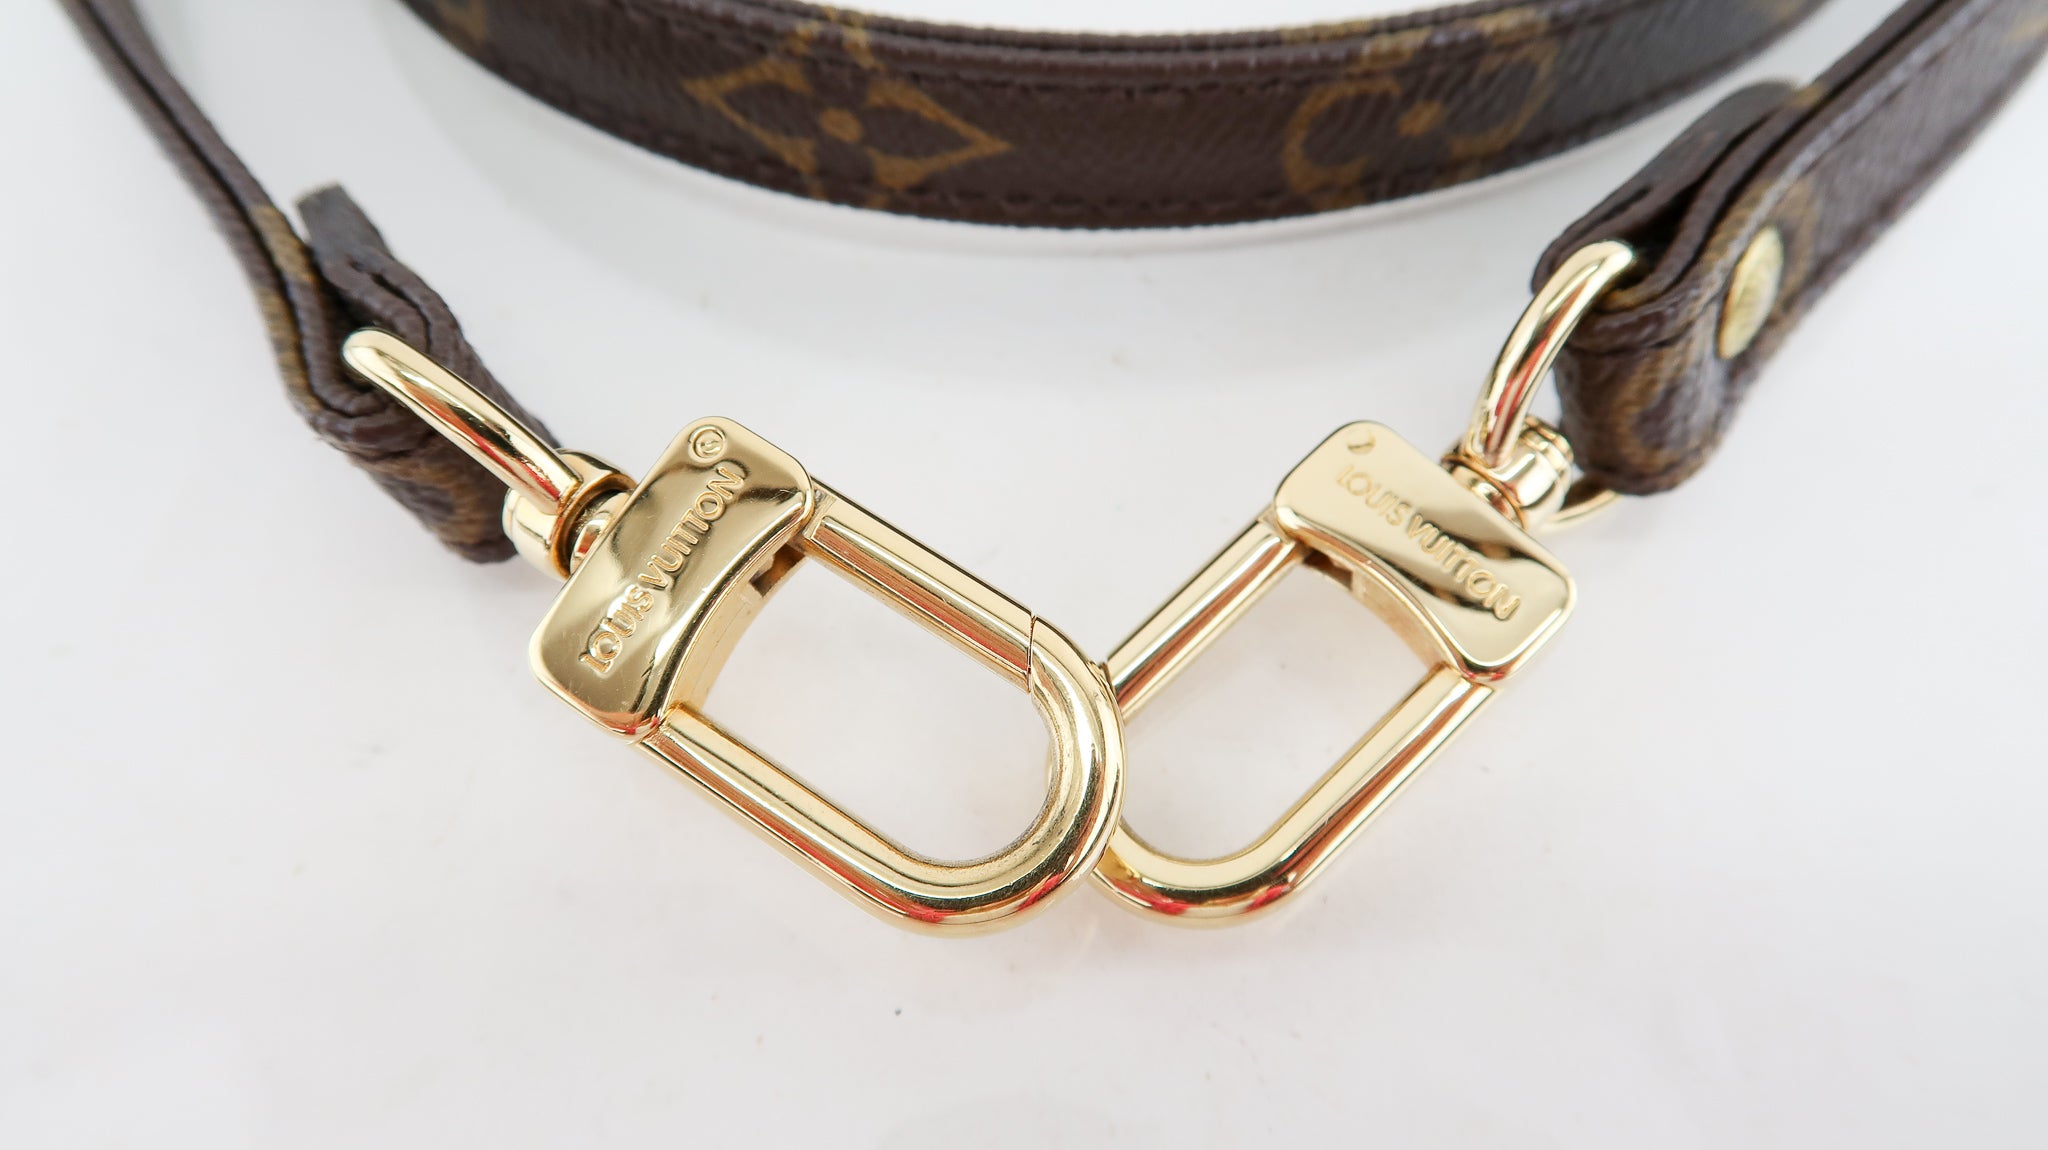 Louis Vuitton Adjustable Monogram Shoulder Strap